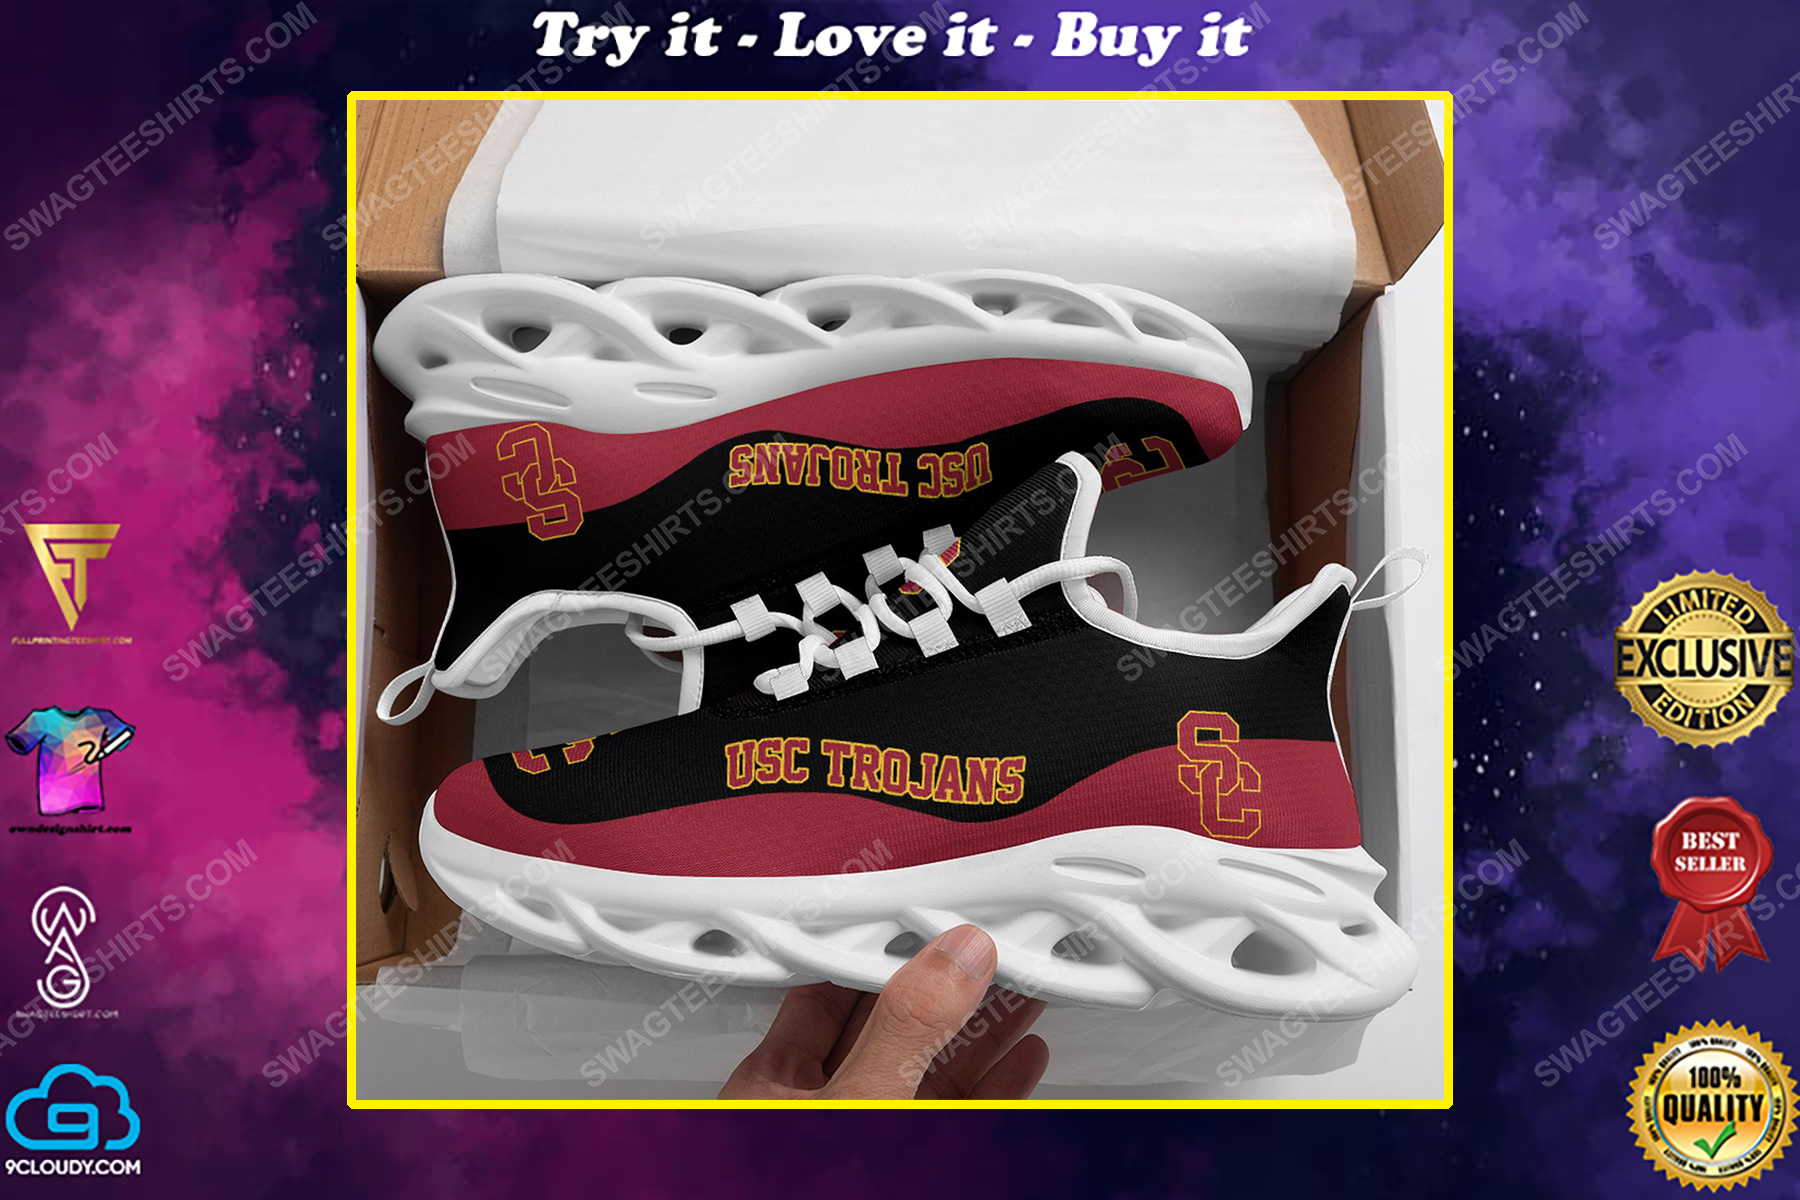 The usc trojans football team max soul shoes